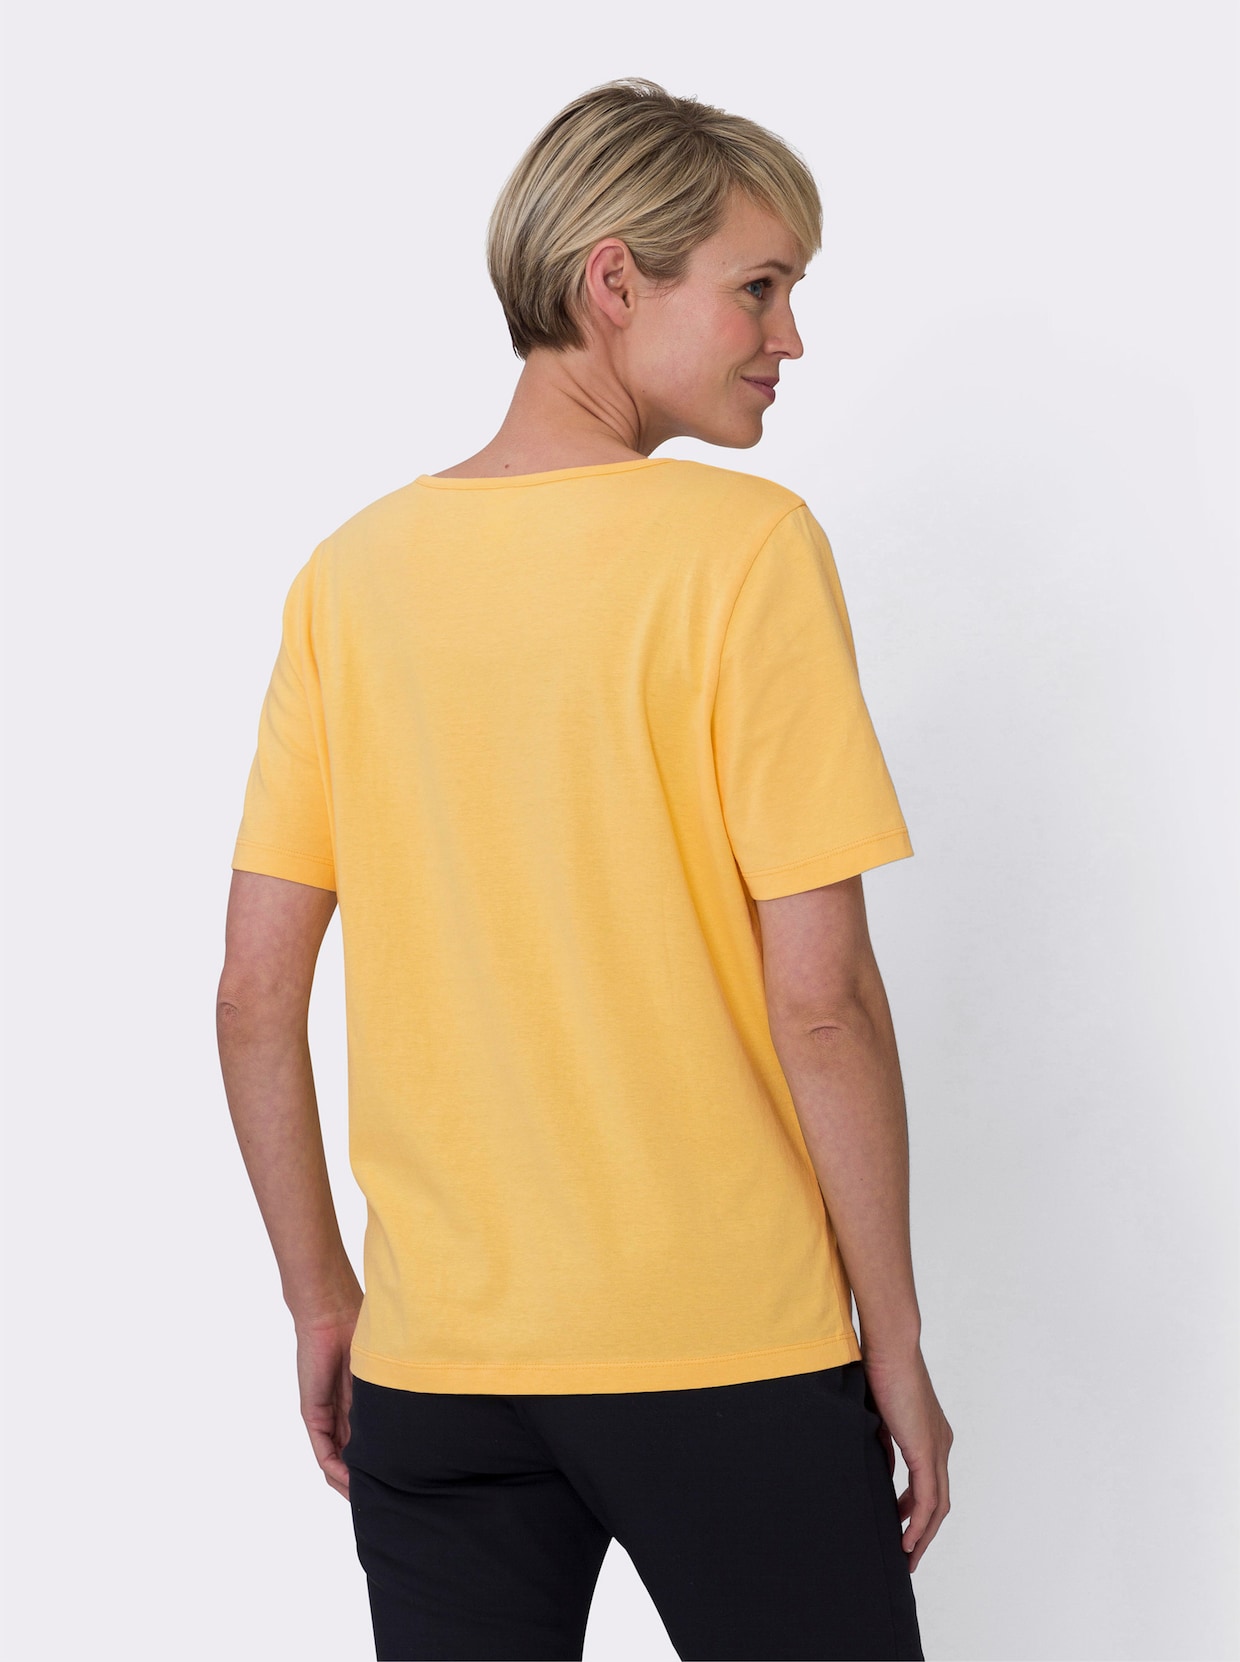 Tričko - žlutá-bílá